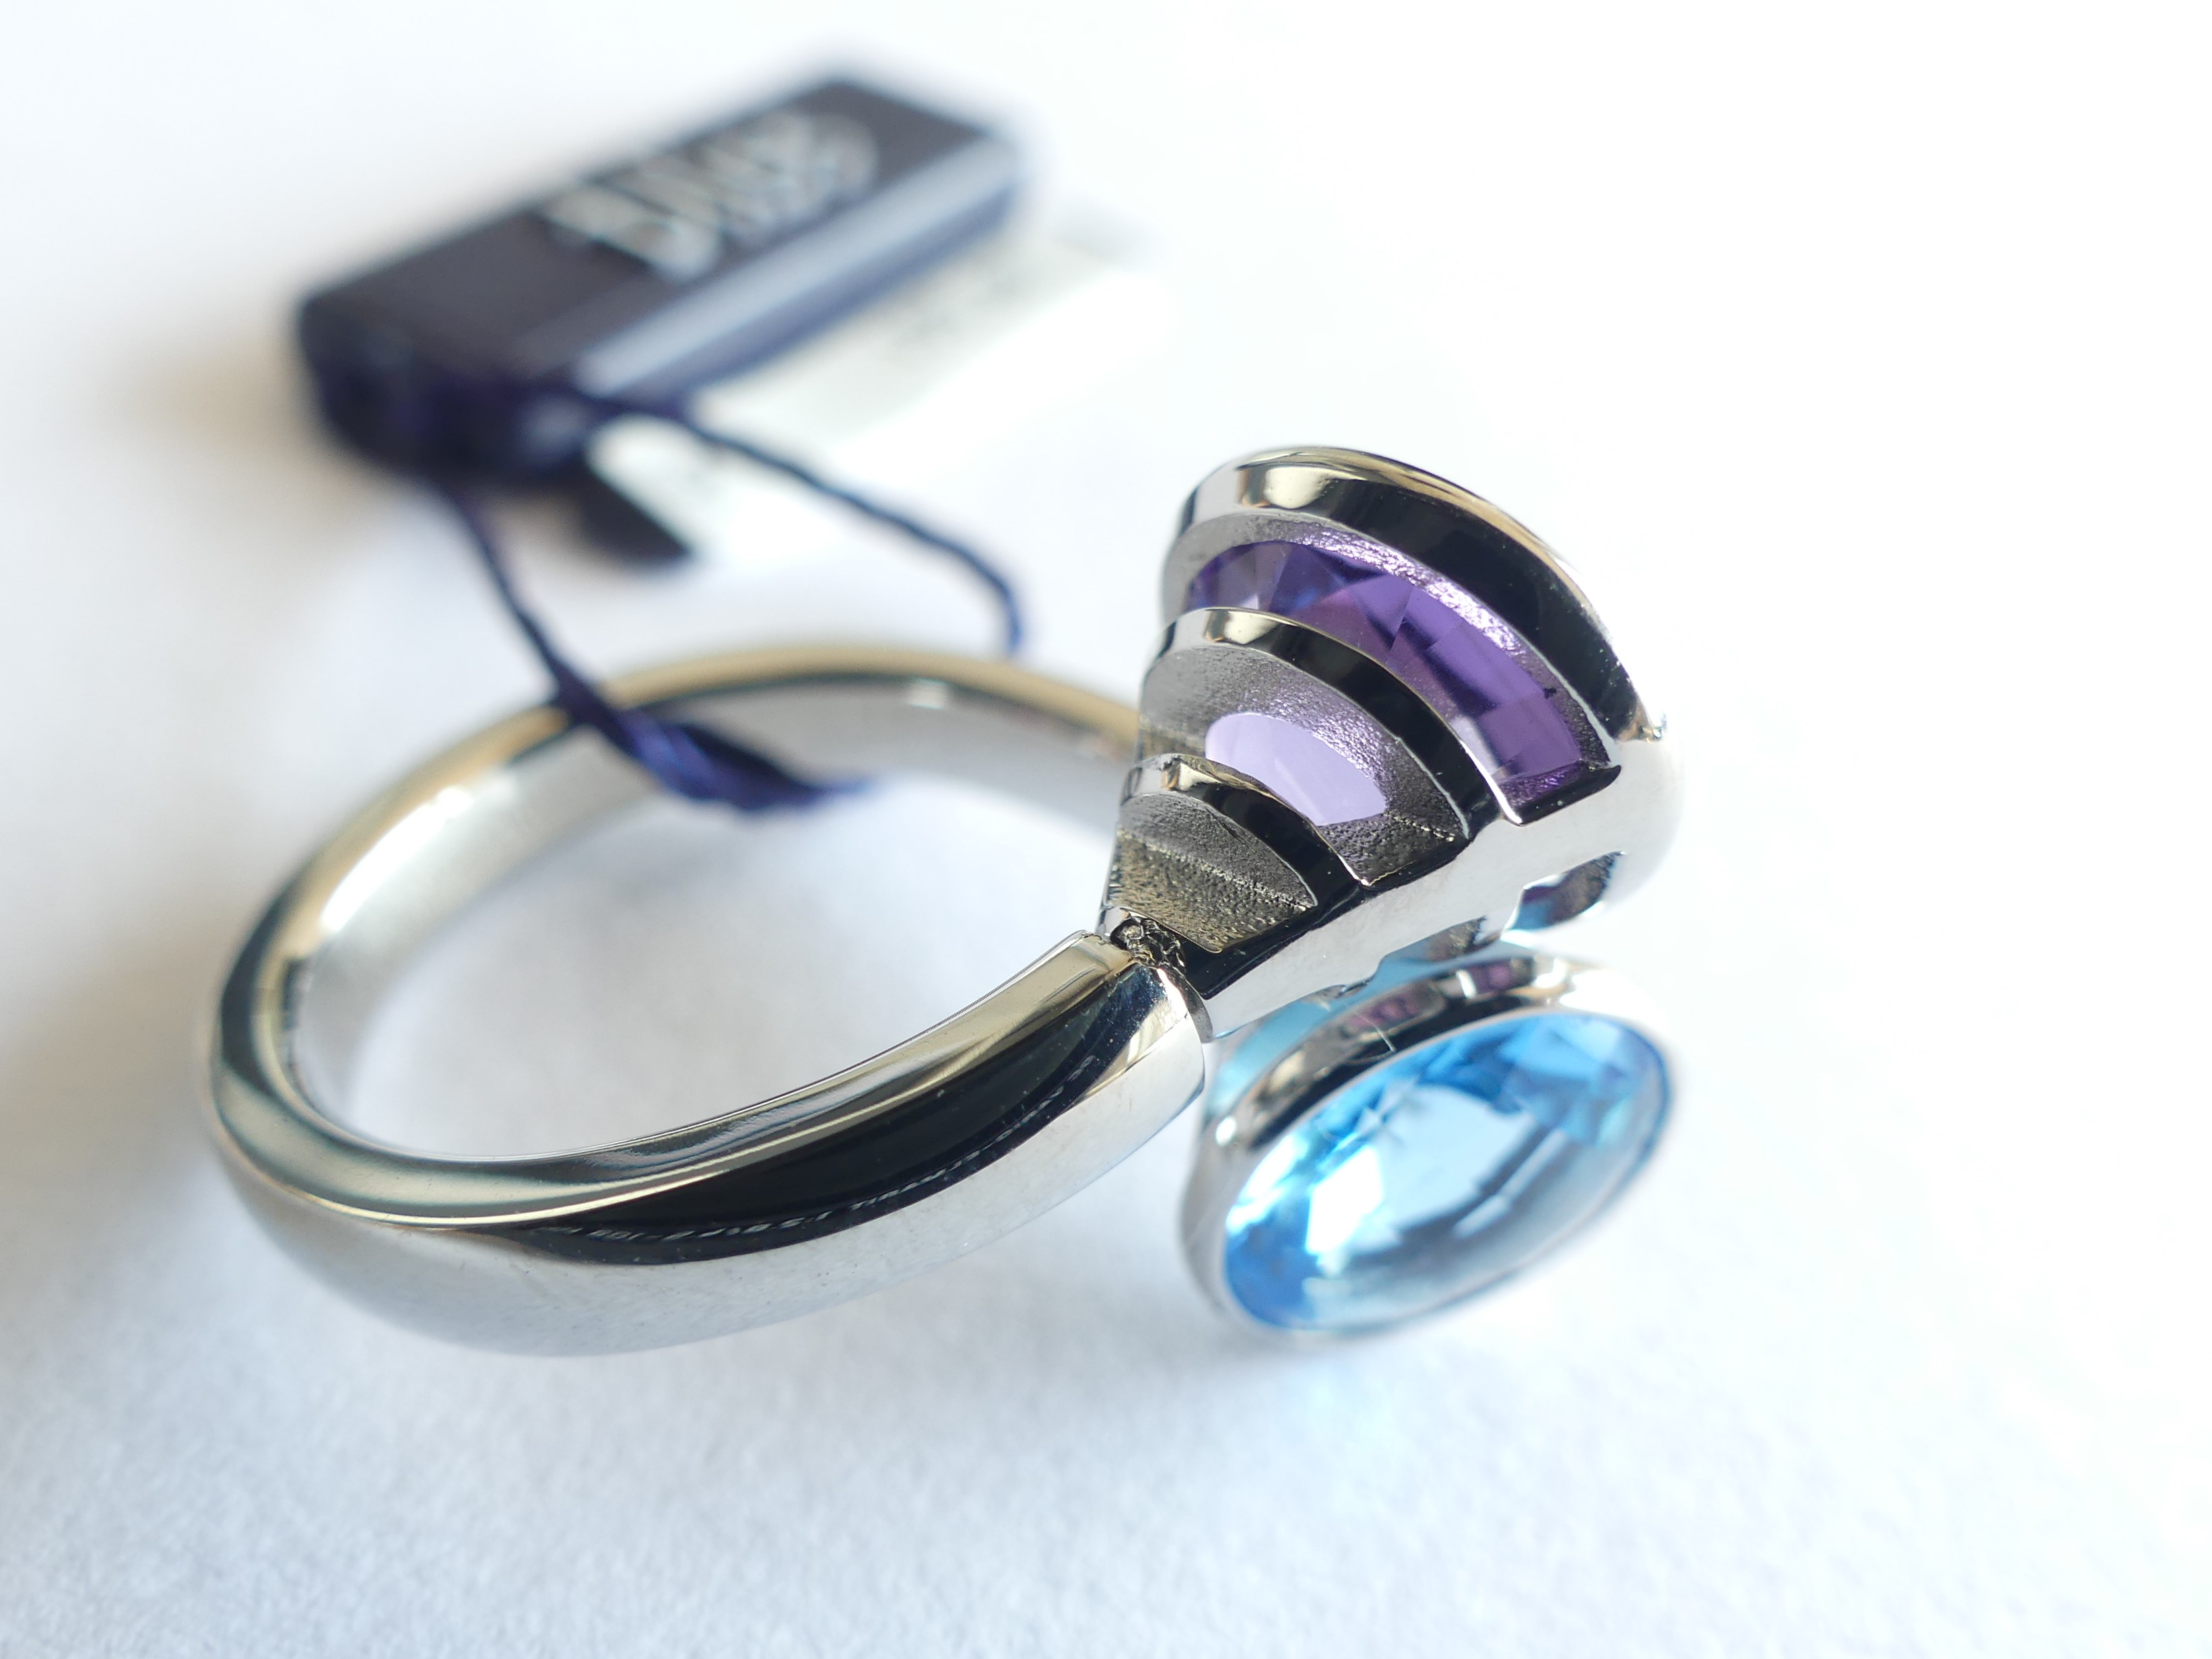 Bliss stalen ring met paarse en blauwe steen en klein diamantje, maat 16.5